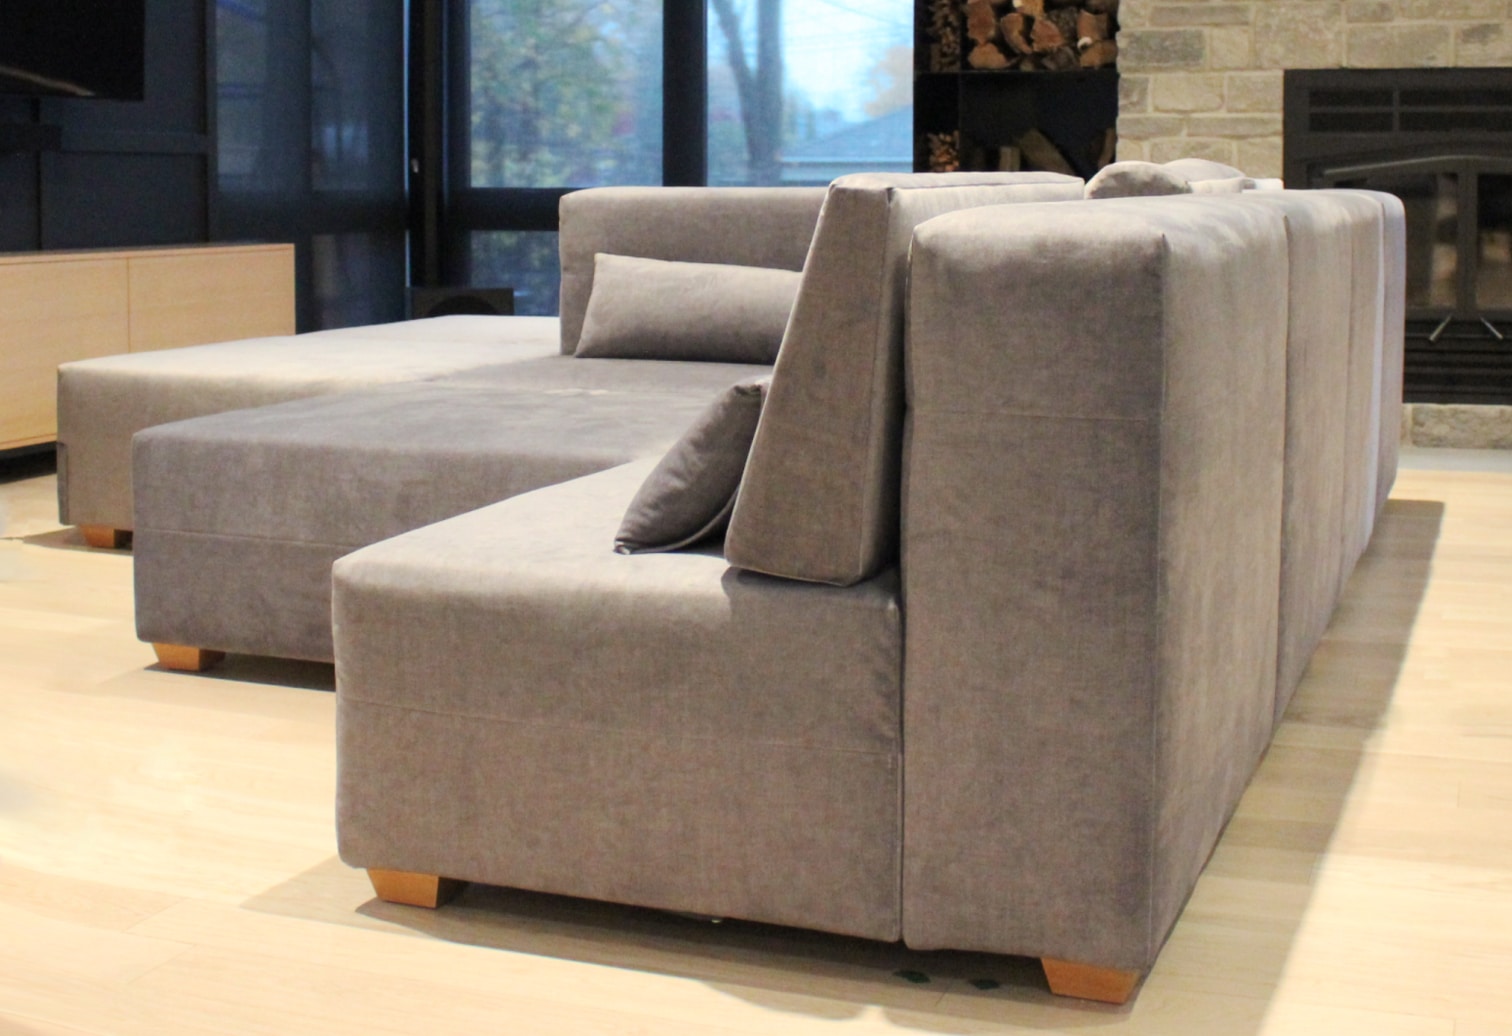 double sofa modulaire sur mesure recouvert en velours